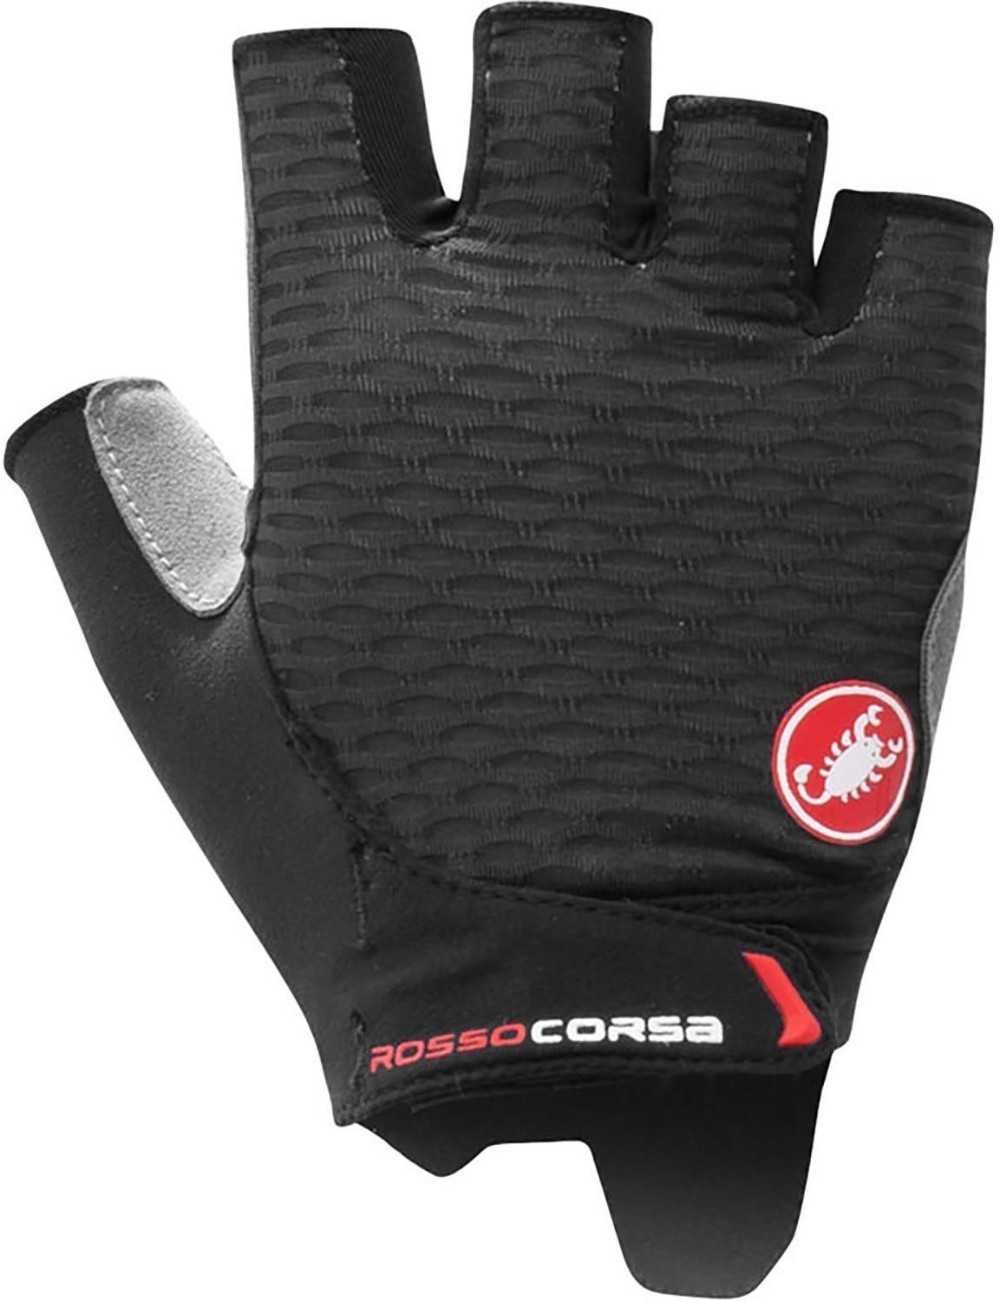 Rosso Corsa 2 Womens Mitts Short Finger Gloves image 0